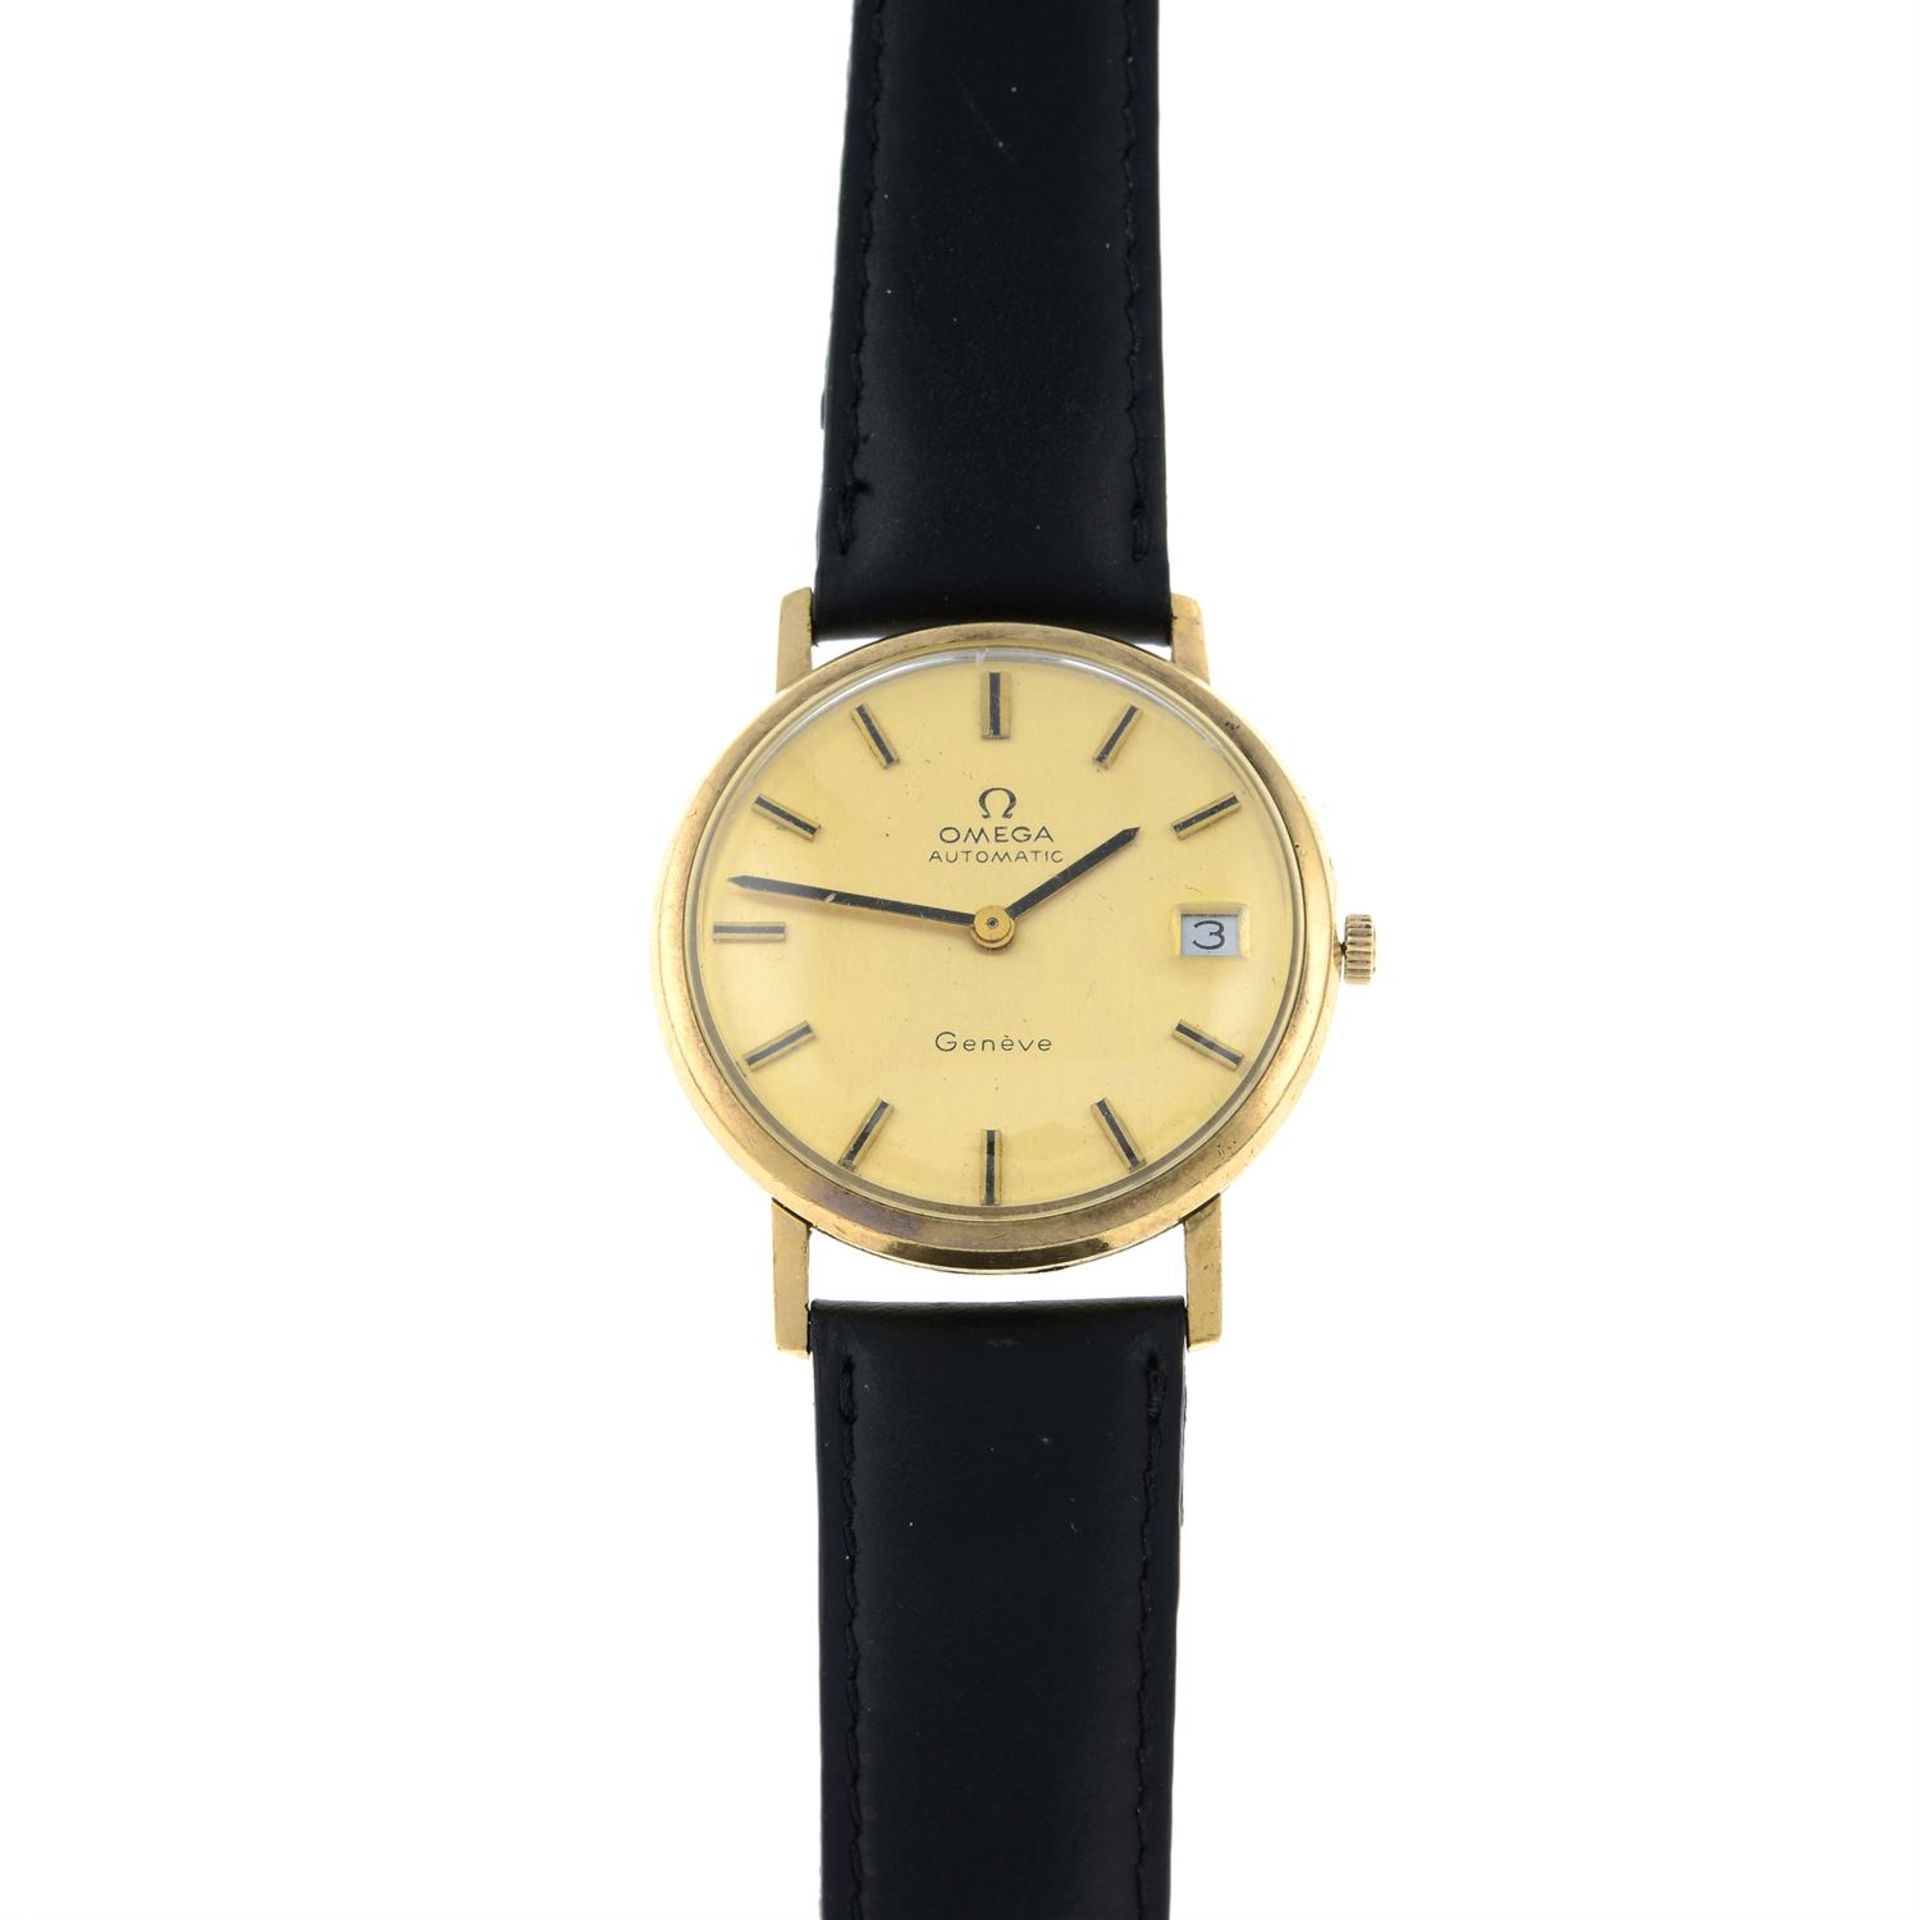 A gentleman's wrist watch, by Omega.